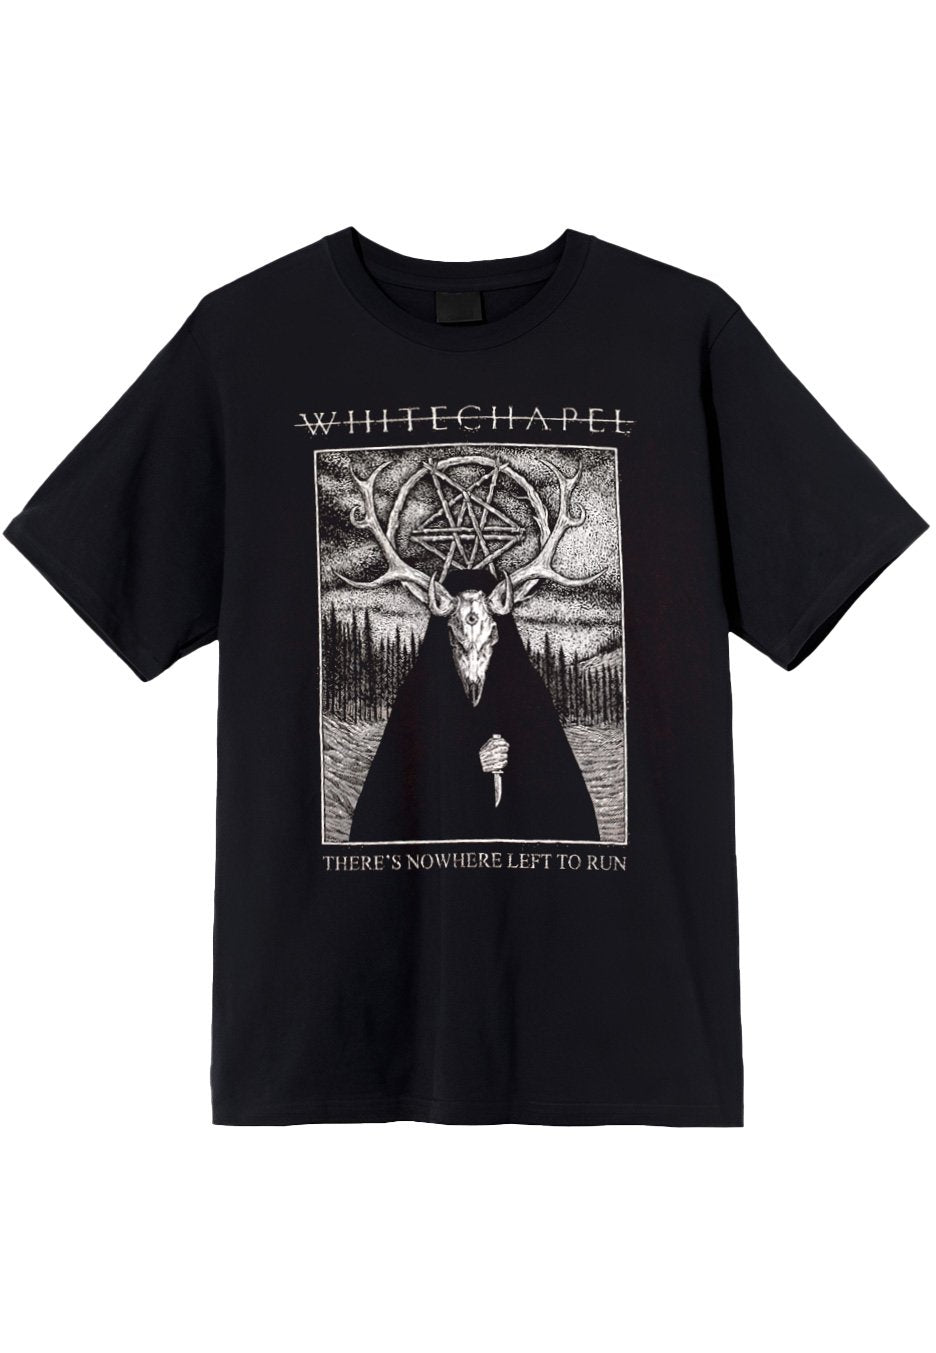 Whitechapel - Nowhere Left To Run Acid Washed - T-Shirt